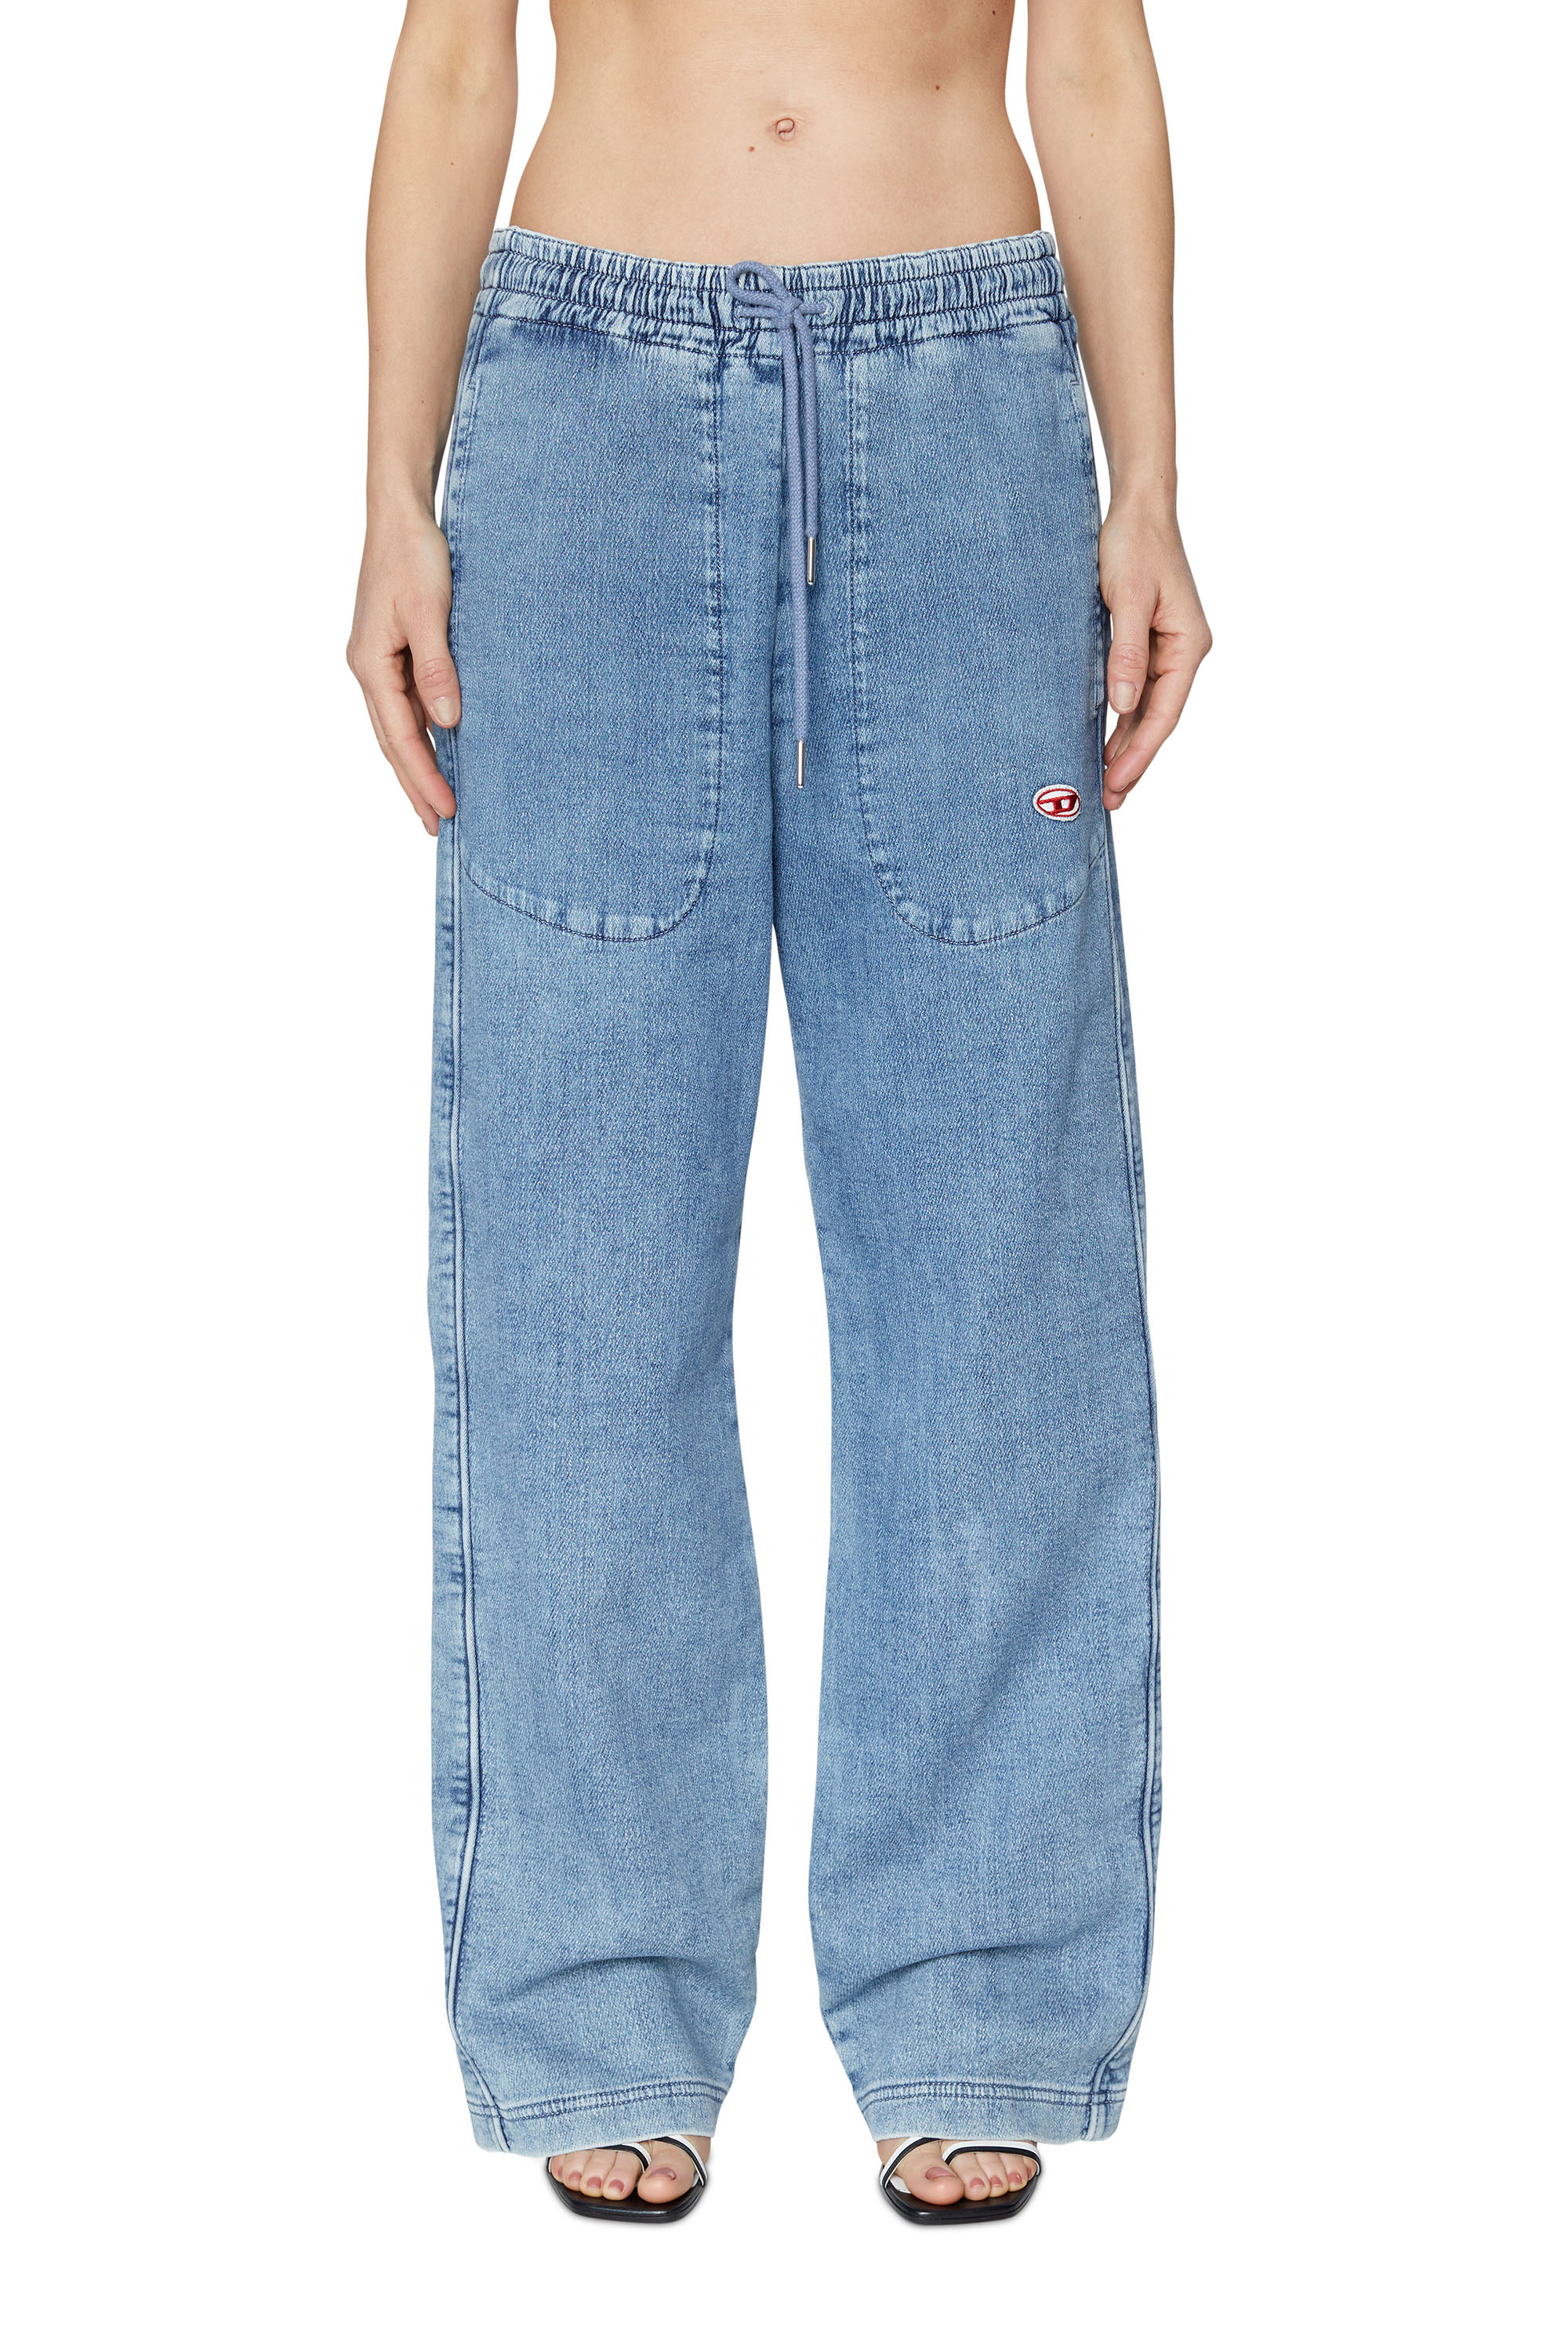 Women's Straight Jeans: Aryel, Sandy, Widee | Diesel®